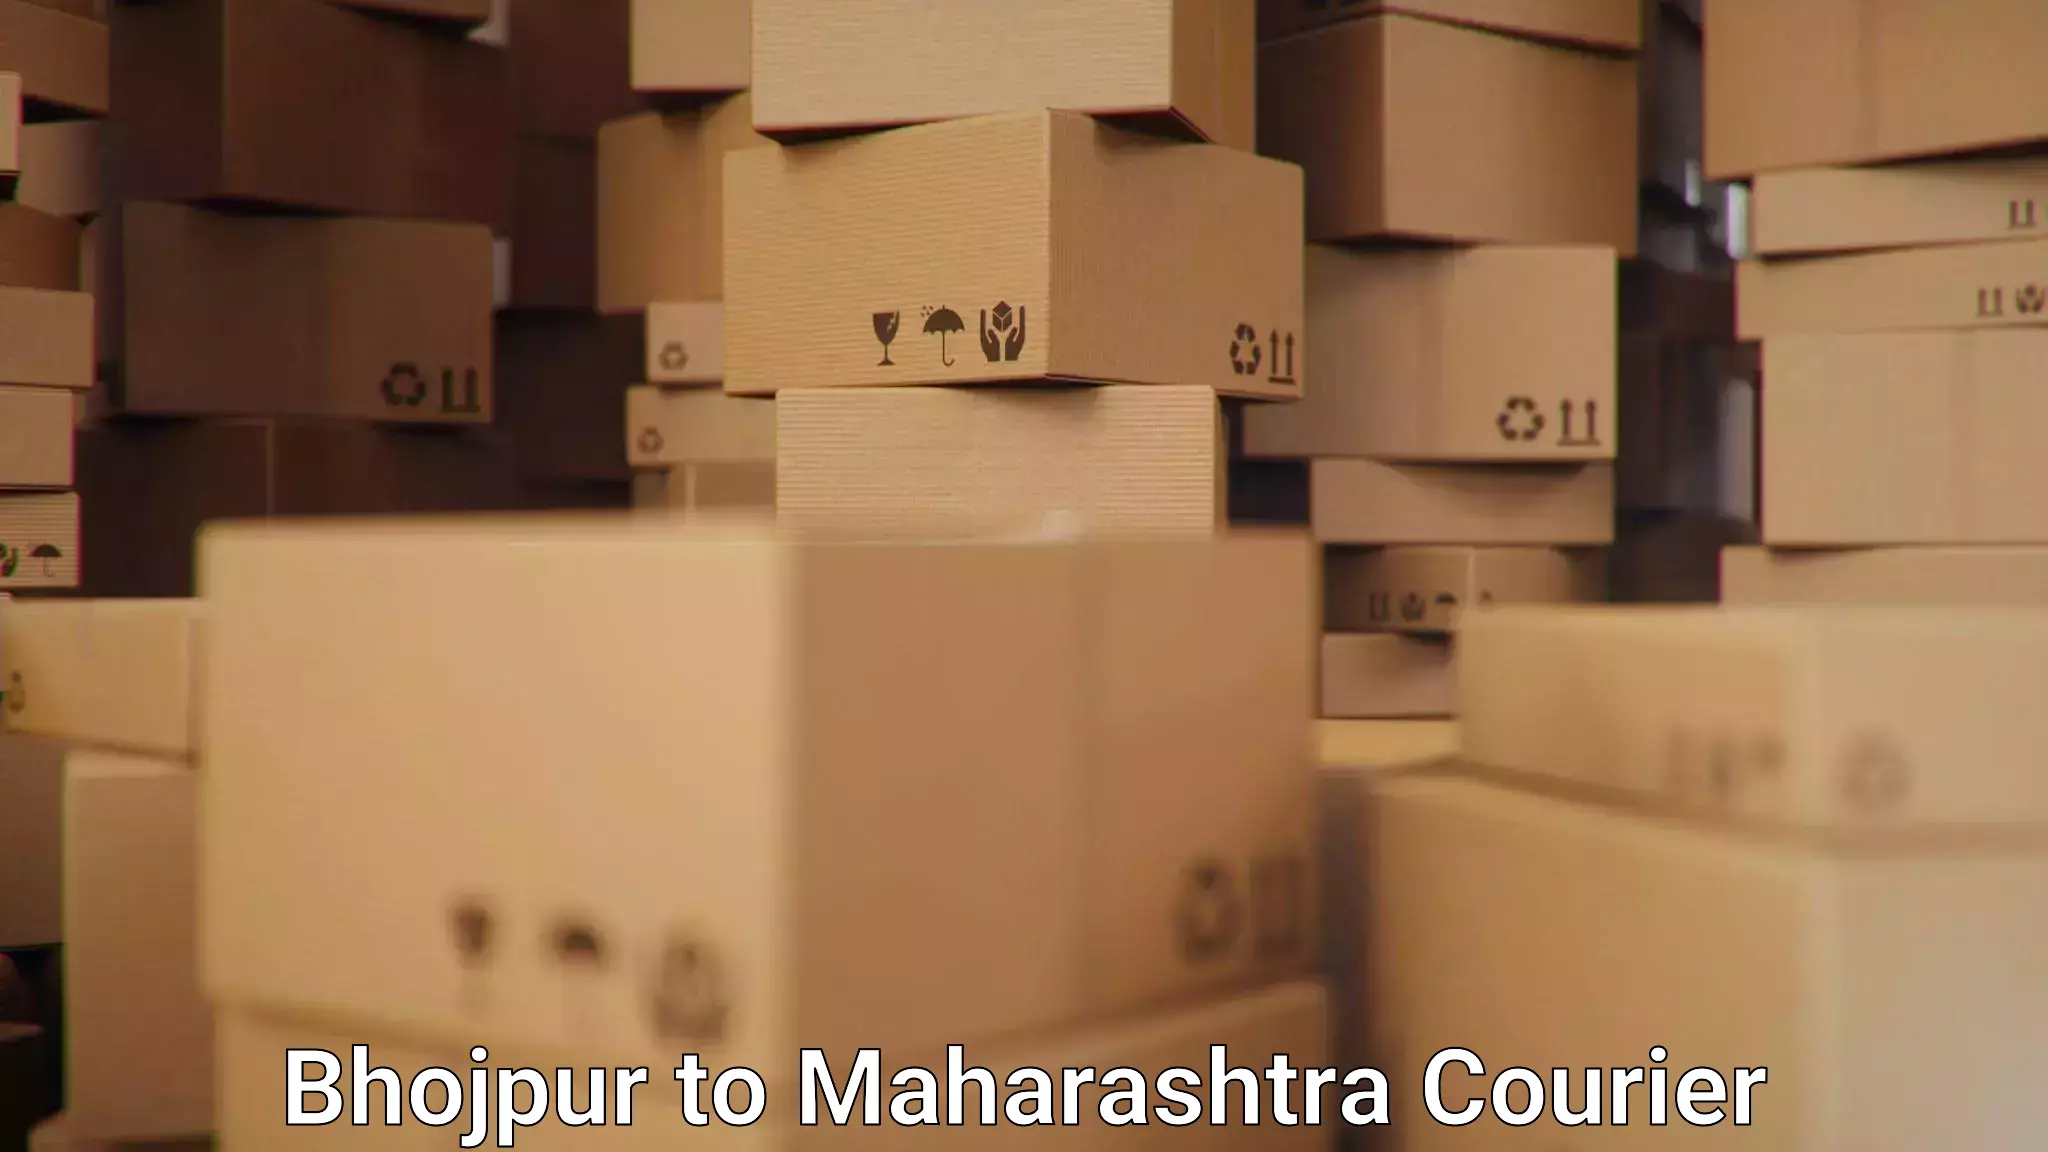 Nationwide shipping capabilities Bhojpur to Shirur